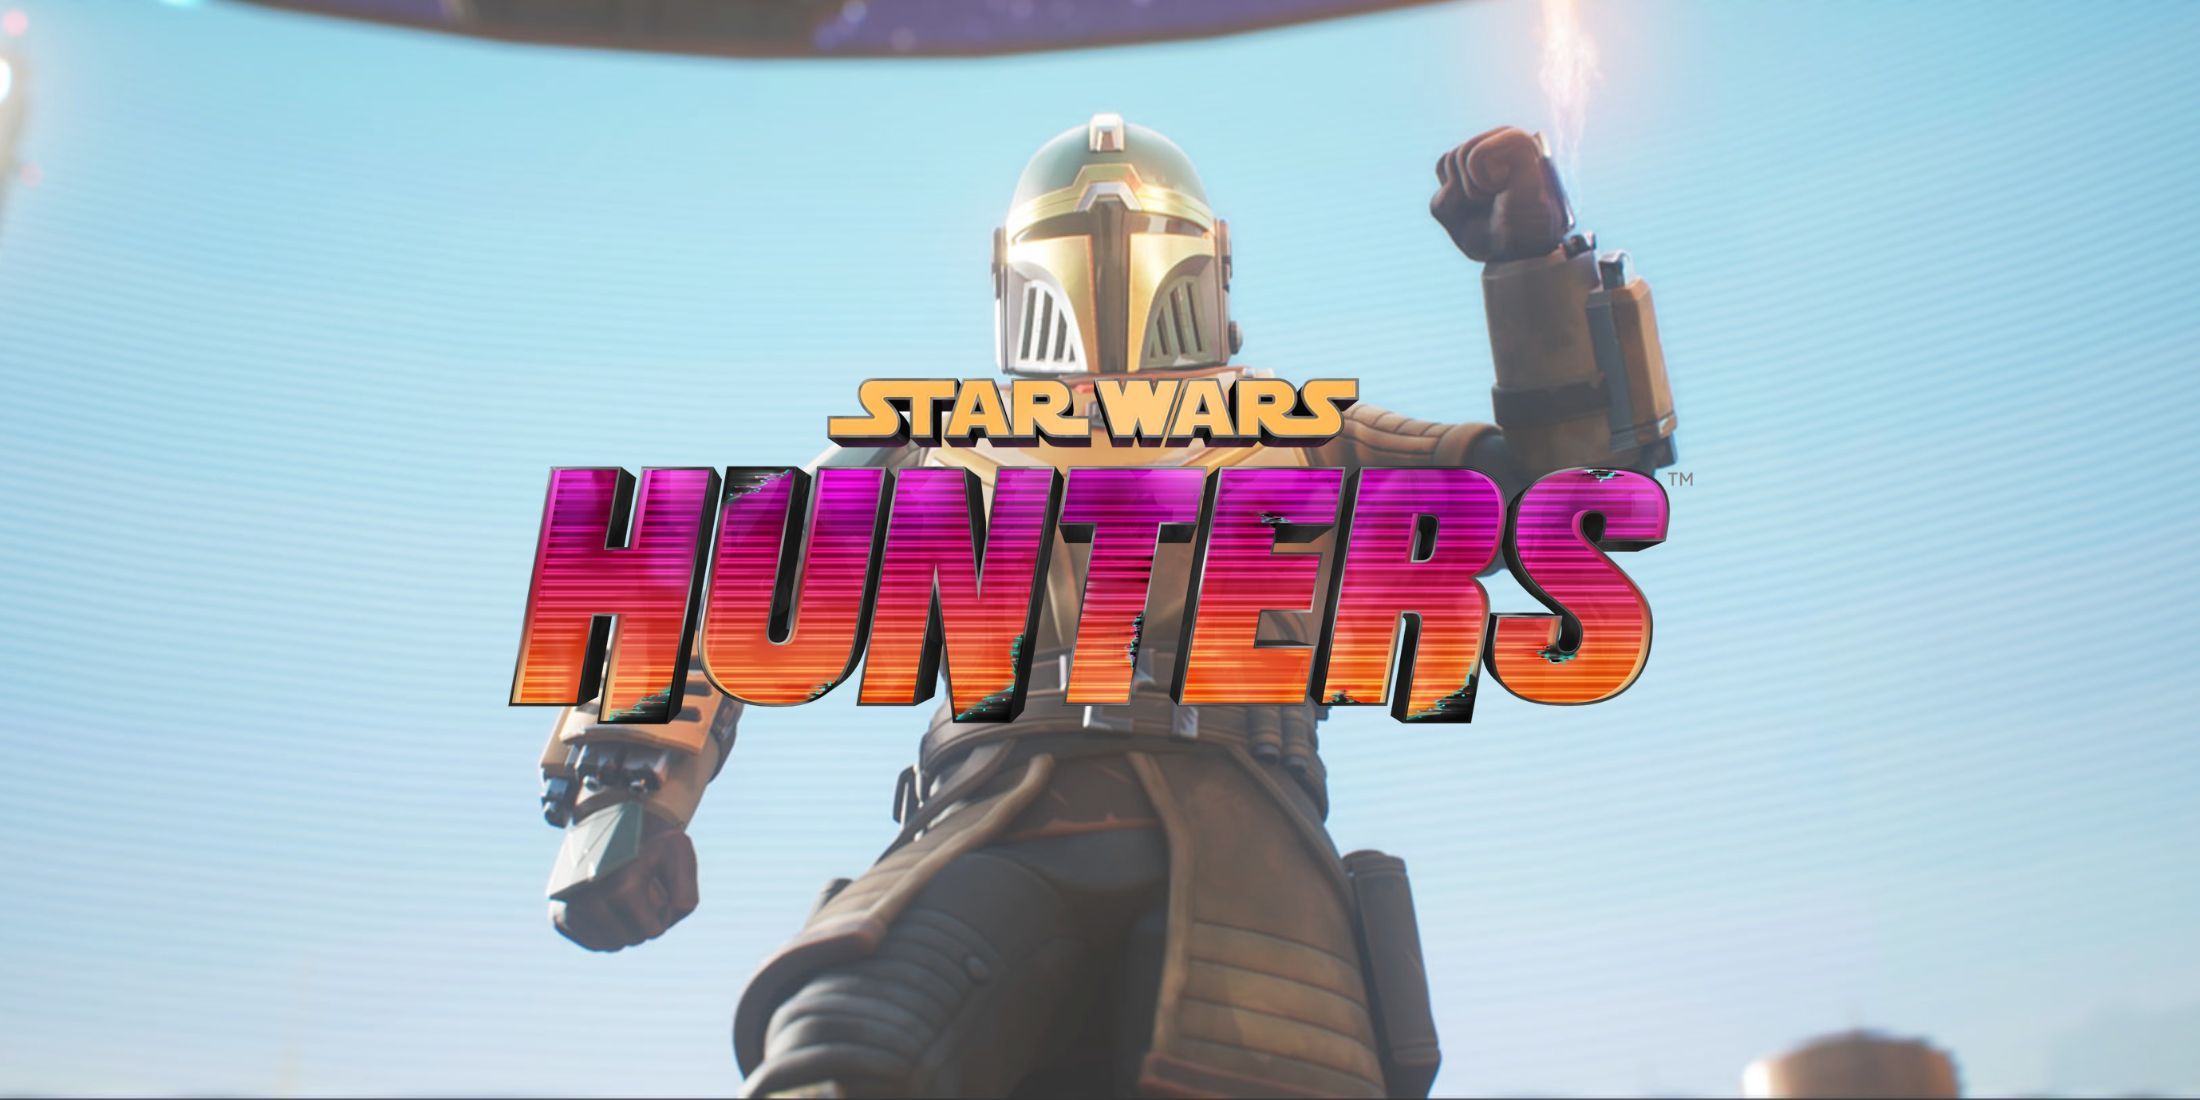 A bounty hunter from Star Wars: Hunters